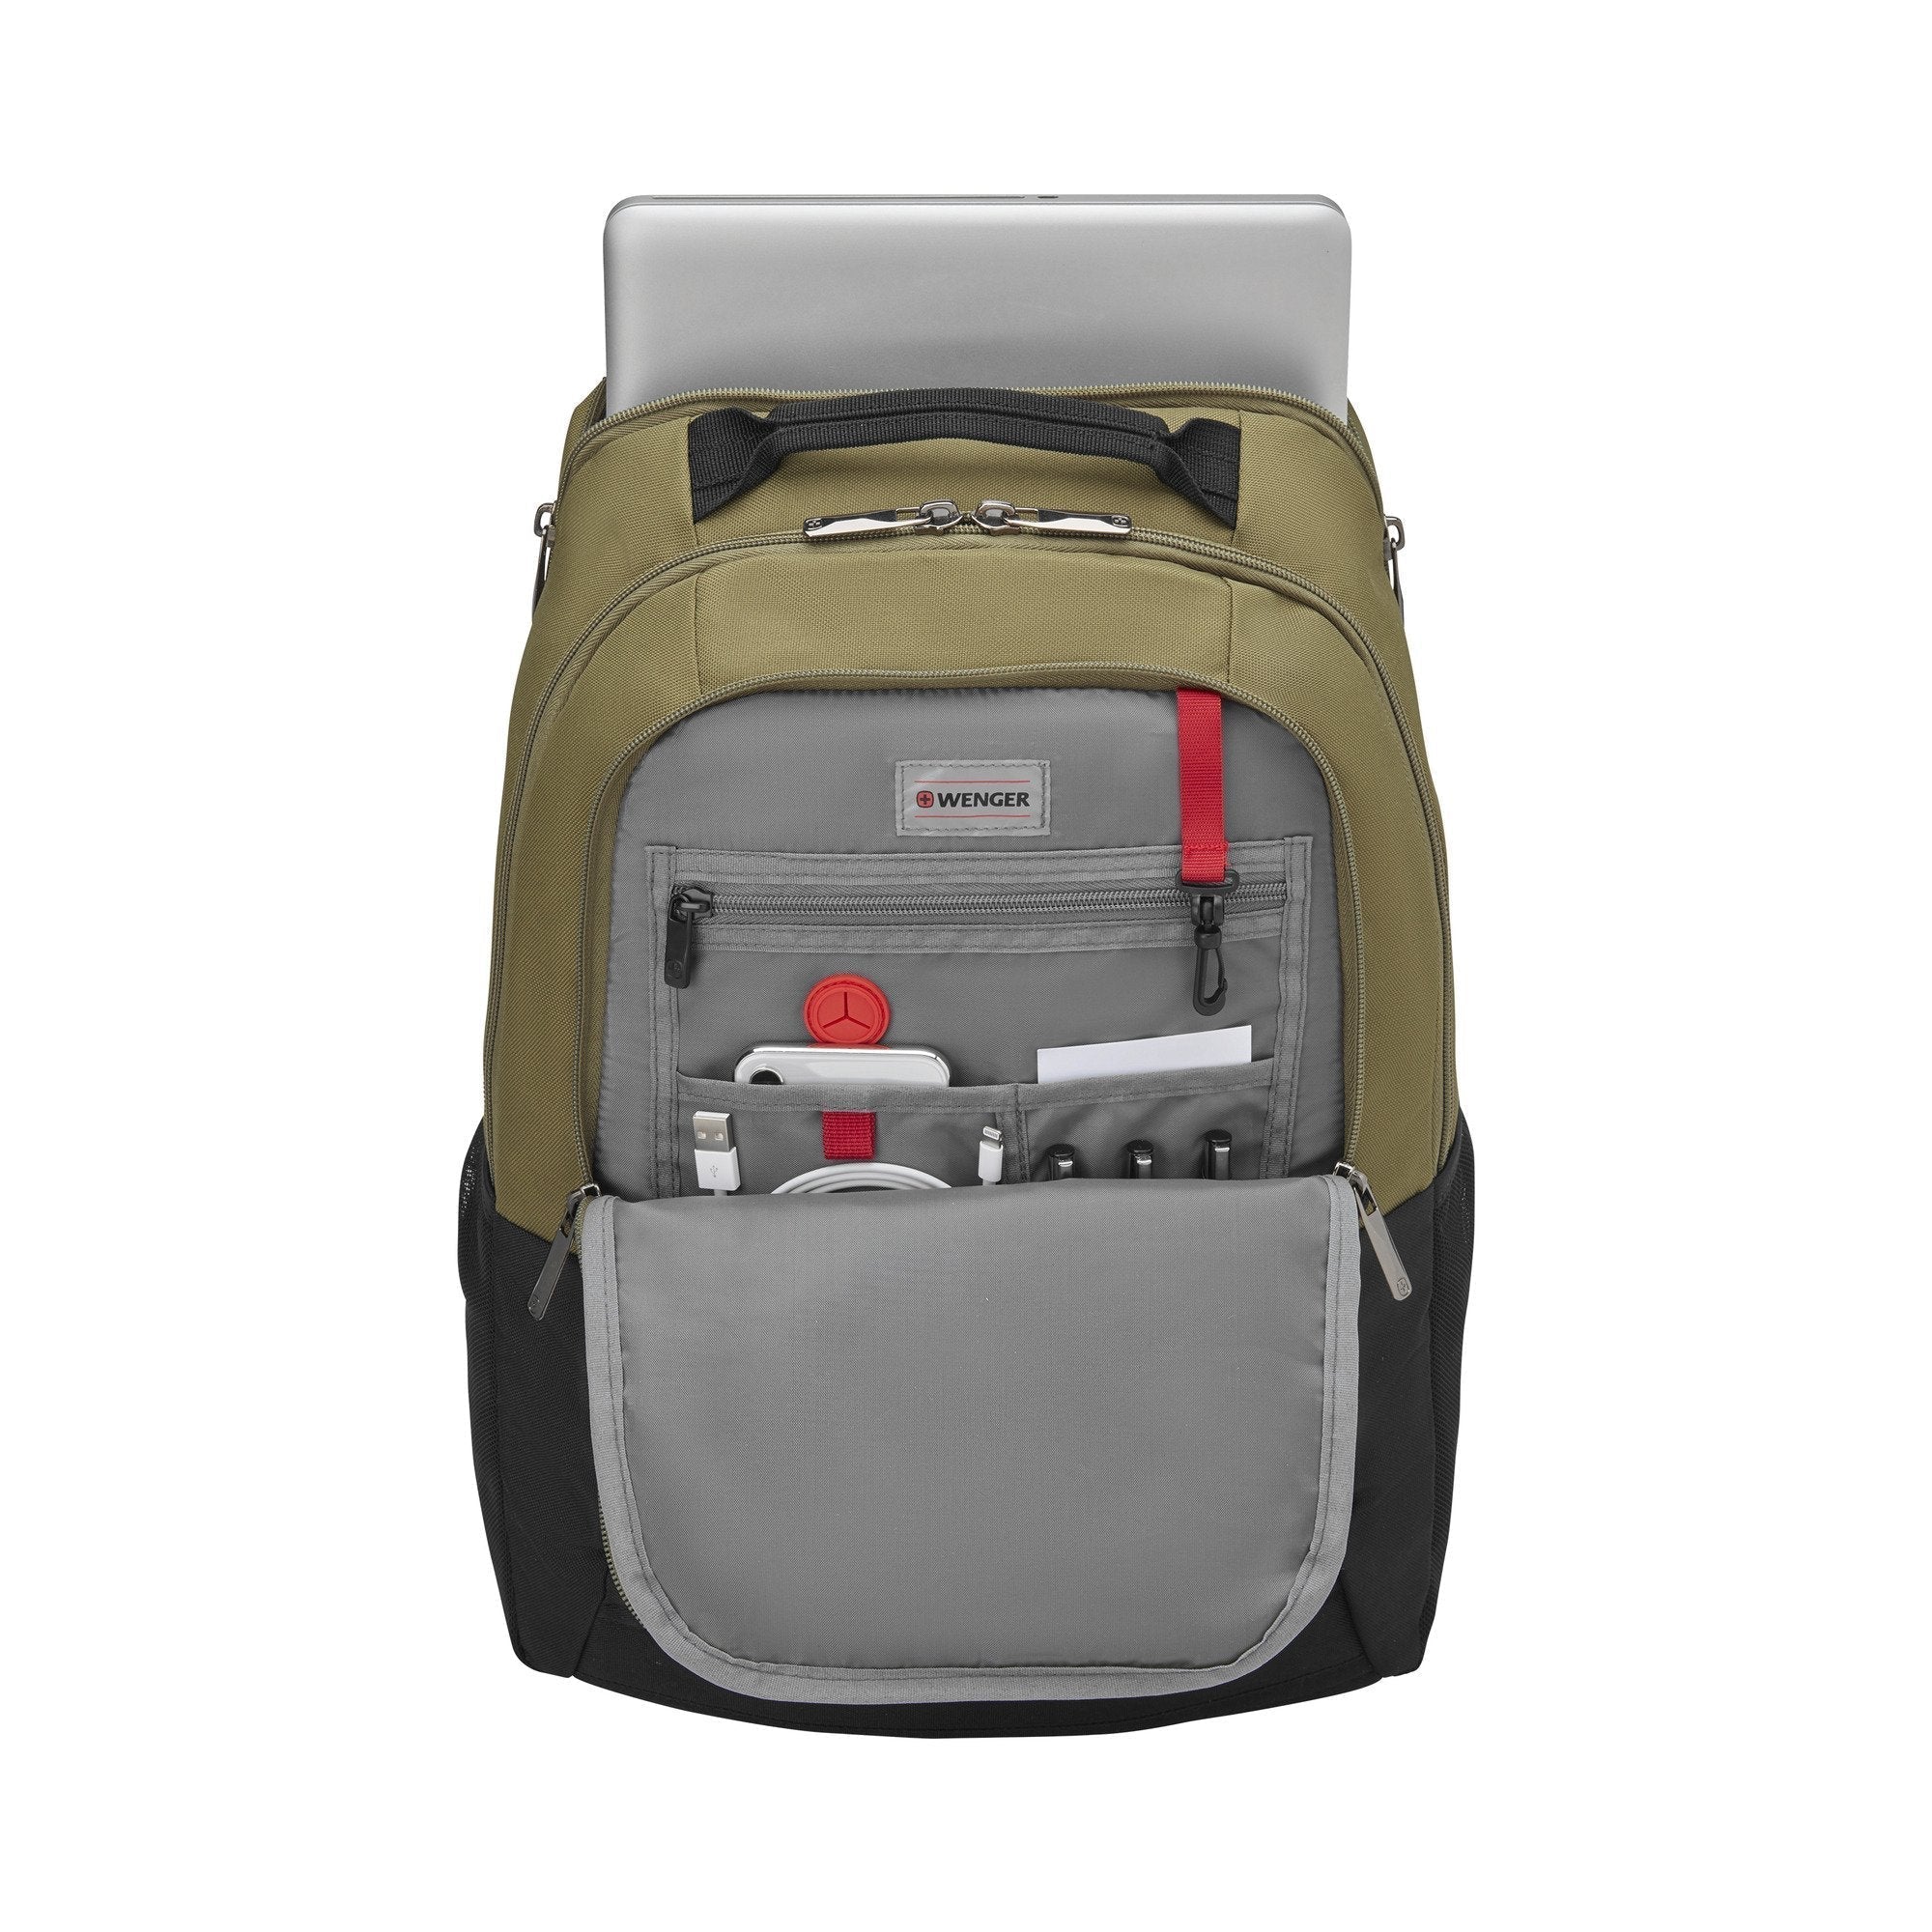 Crinio 16'' Laptop Backpack with Tablet Pocket Olive-Backpacks